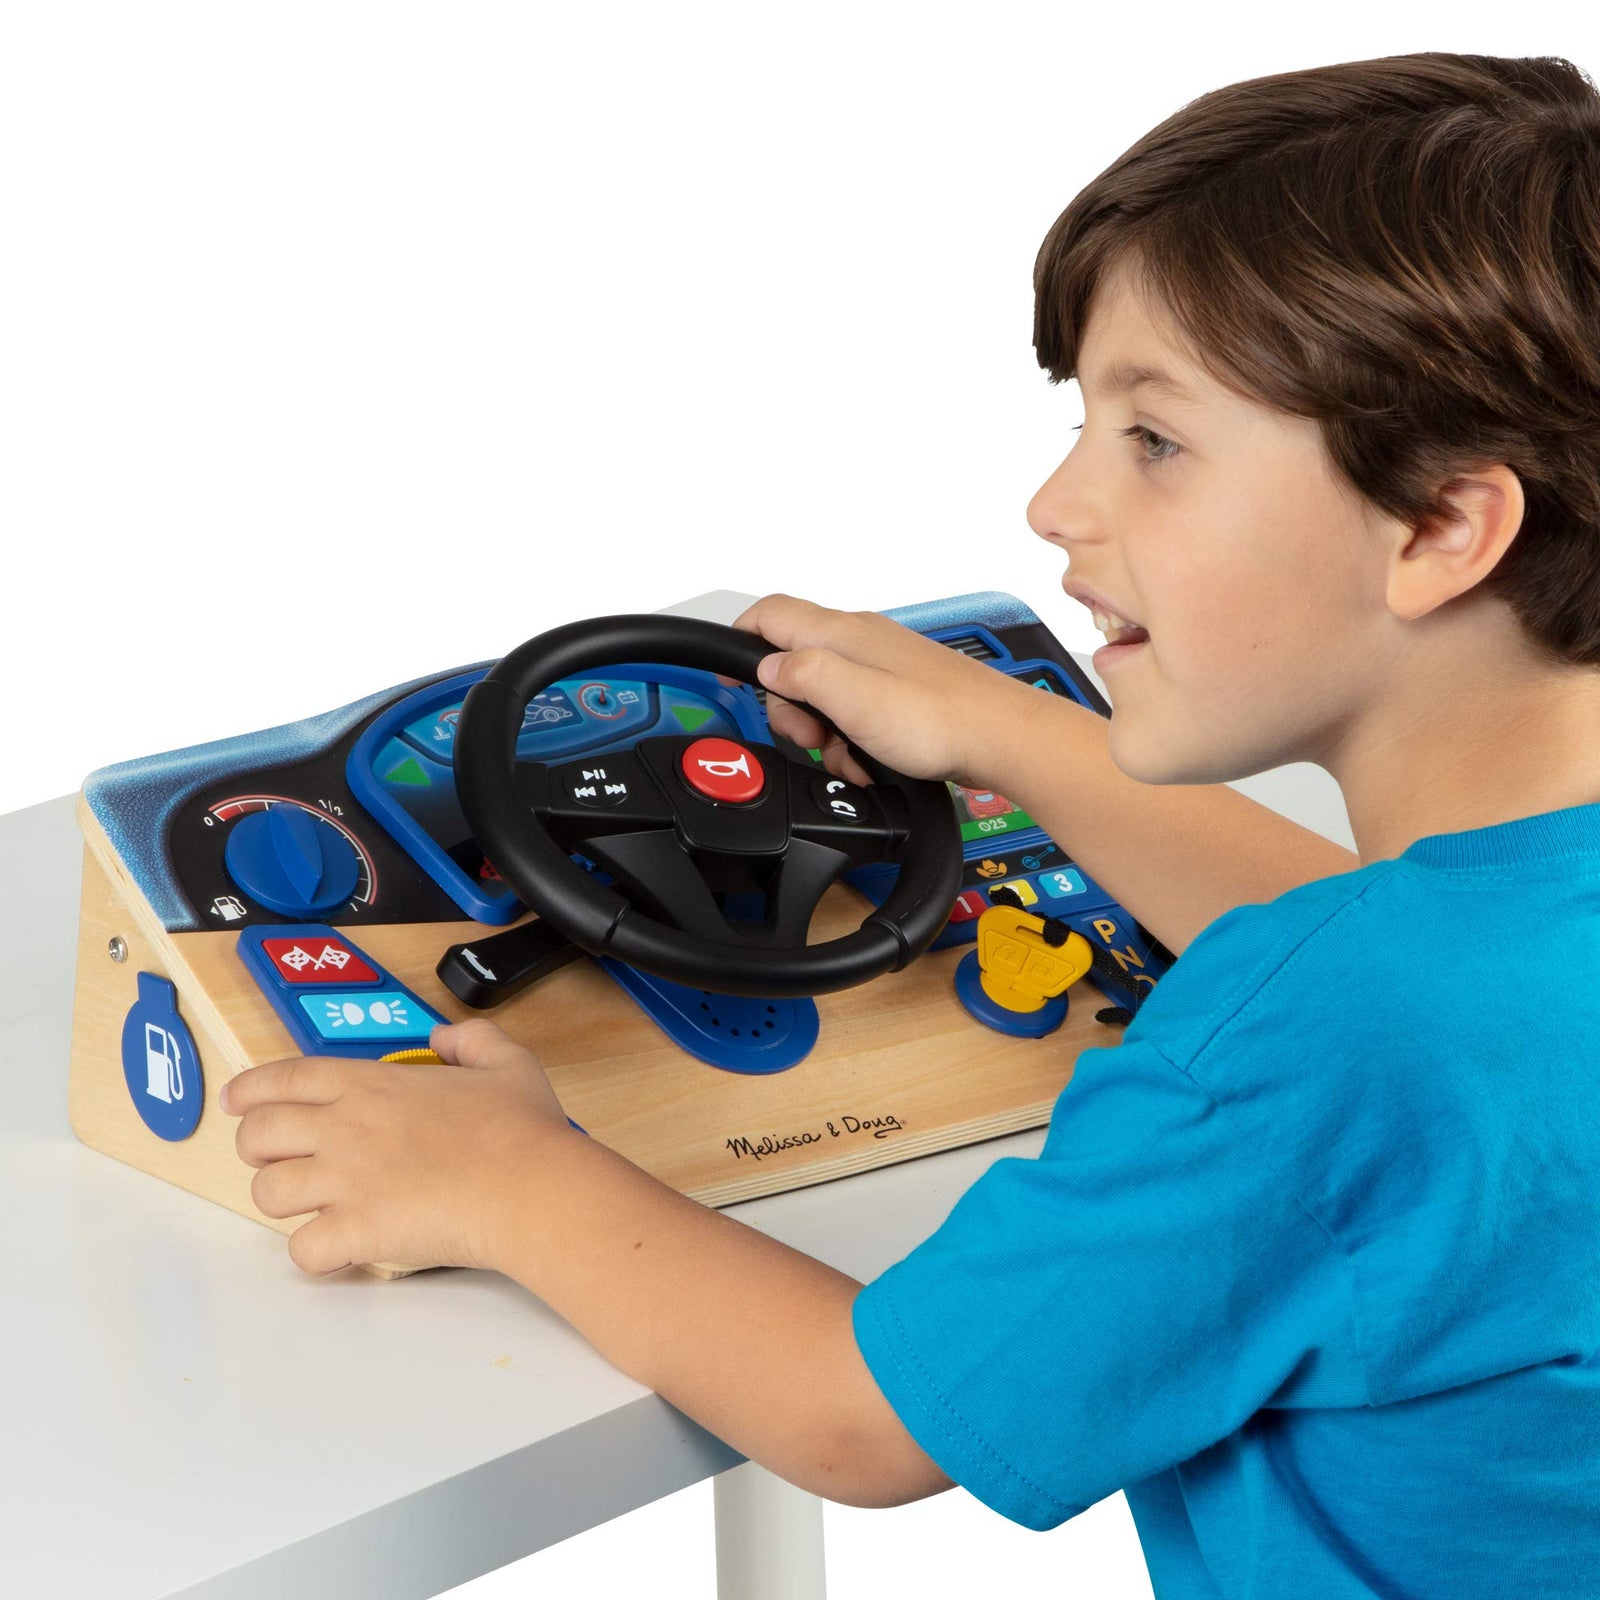 Melissa & Doug Vroom & Zoom Interactive Wooden Dashboard Steering Wheel Pretend Play Driving Toy